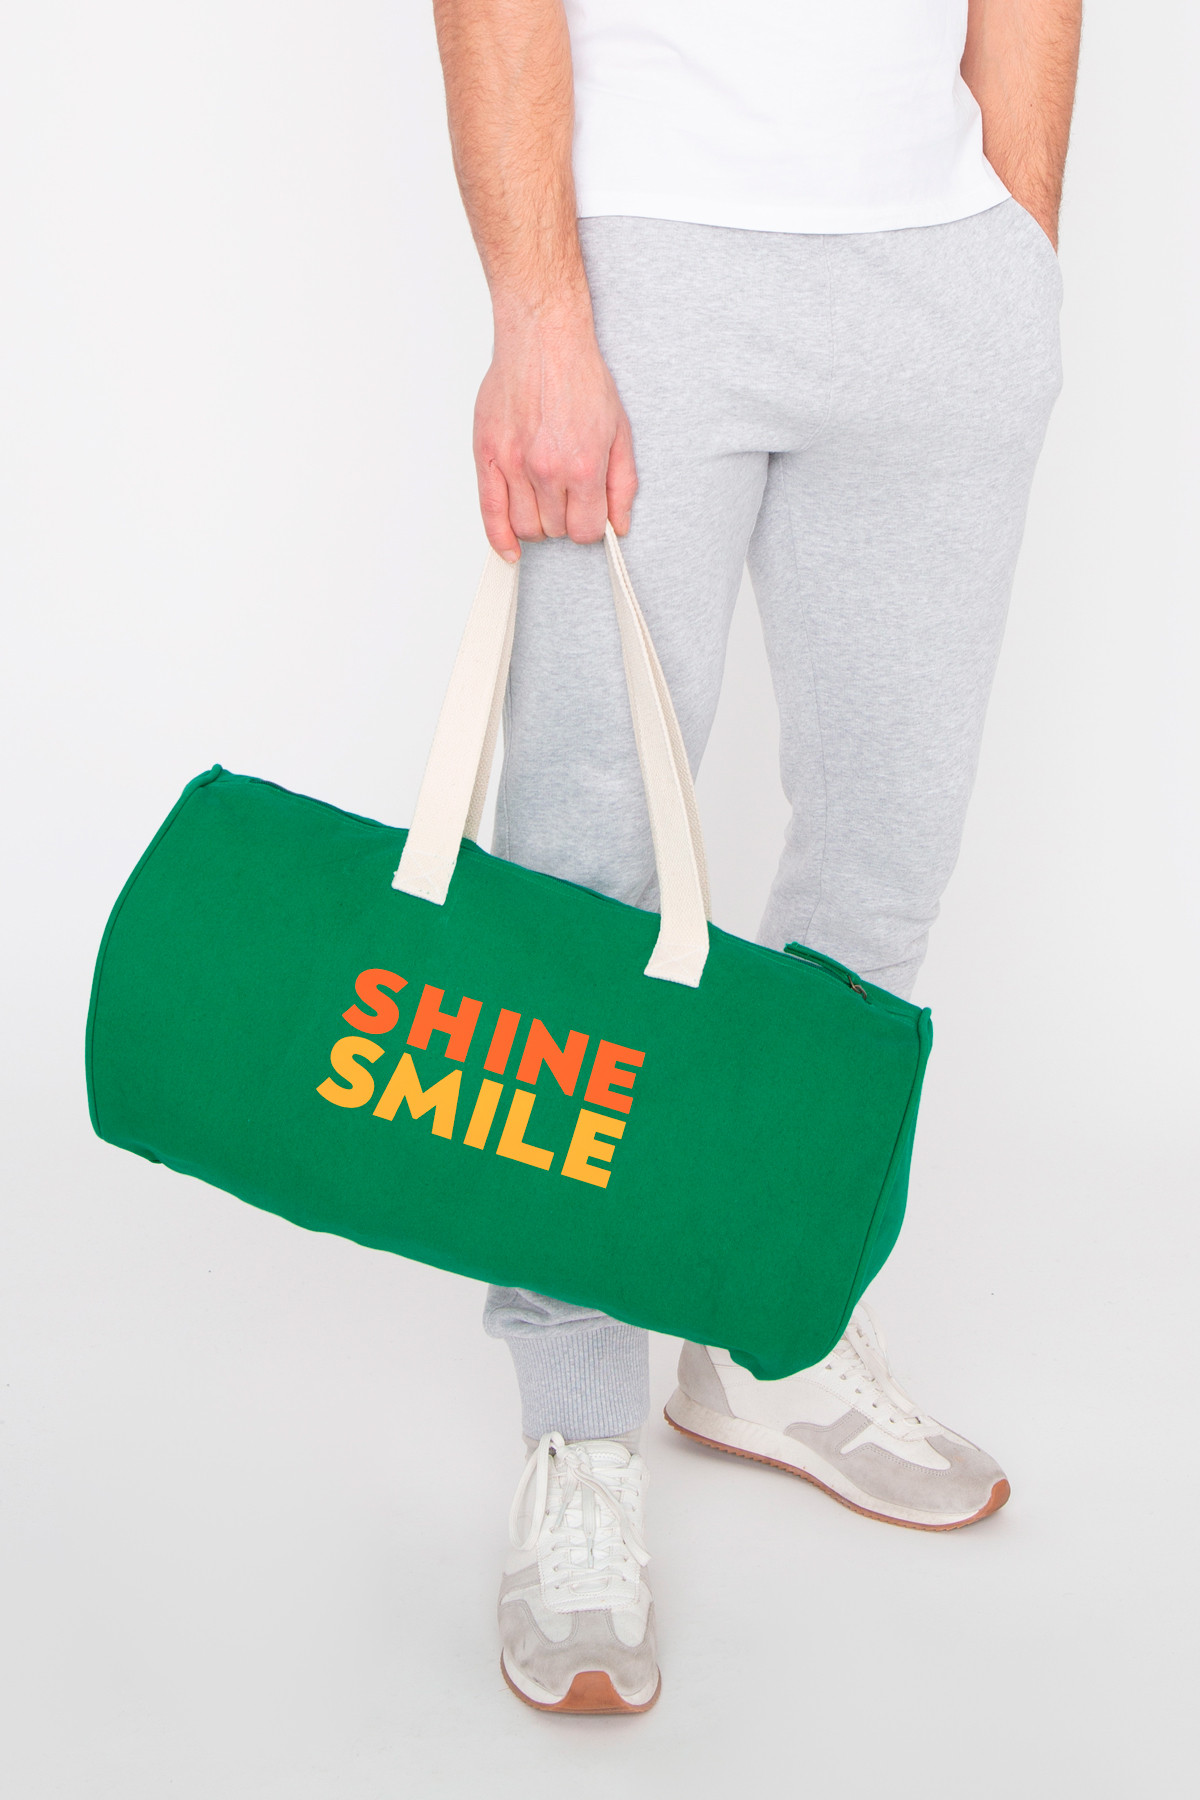 Duffle Bag SHINE SMILE